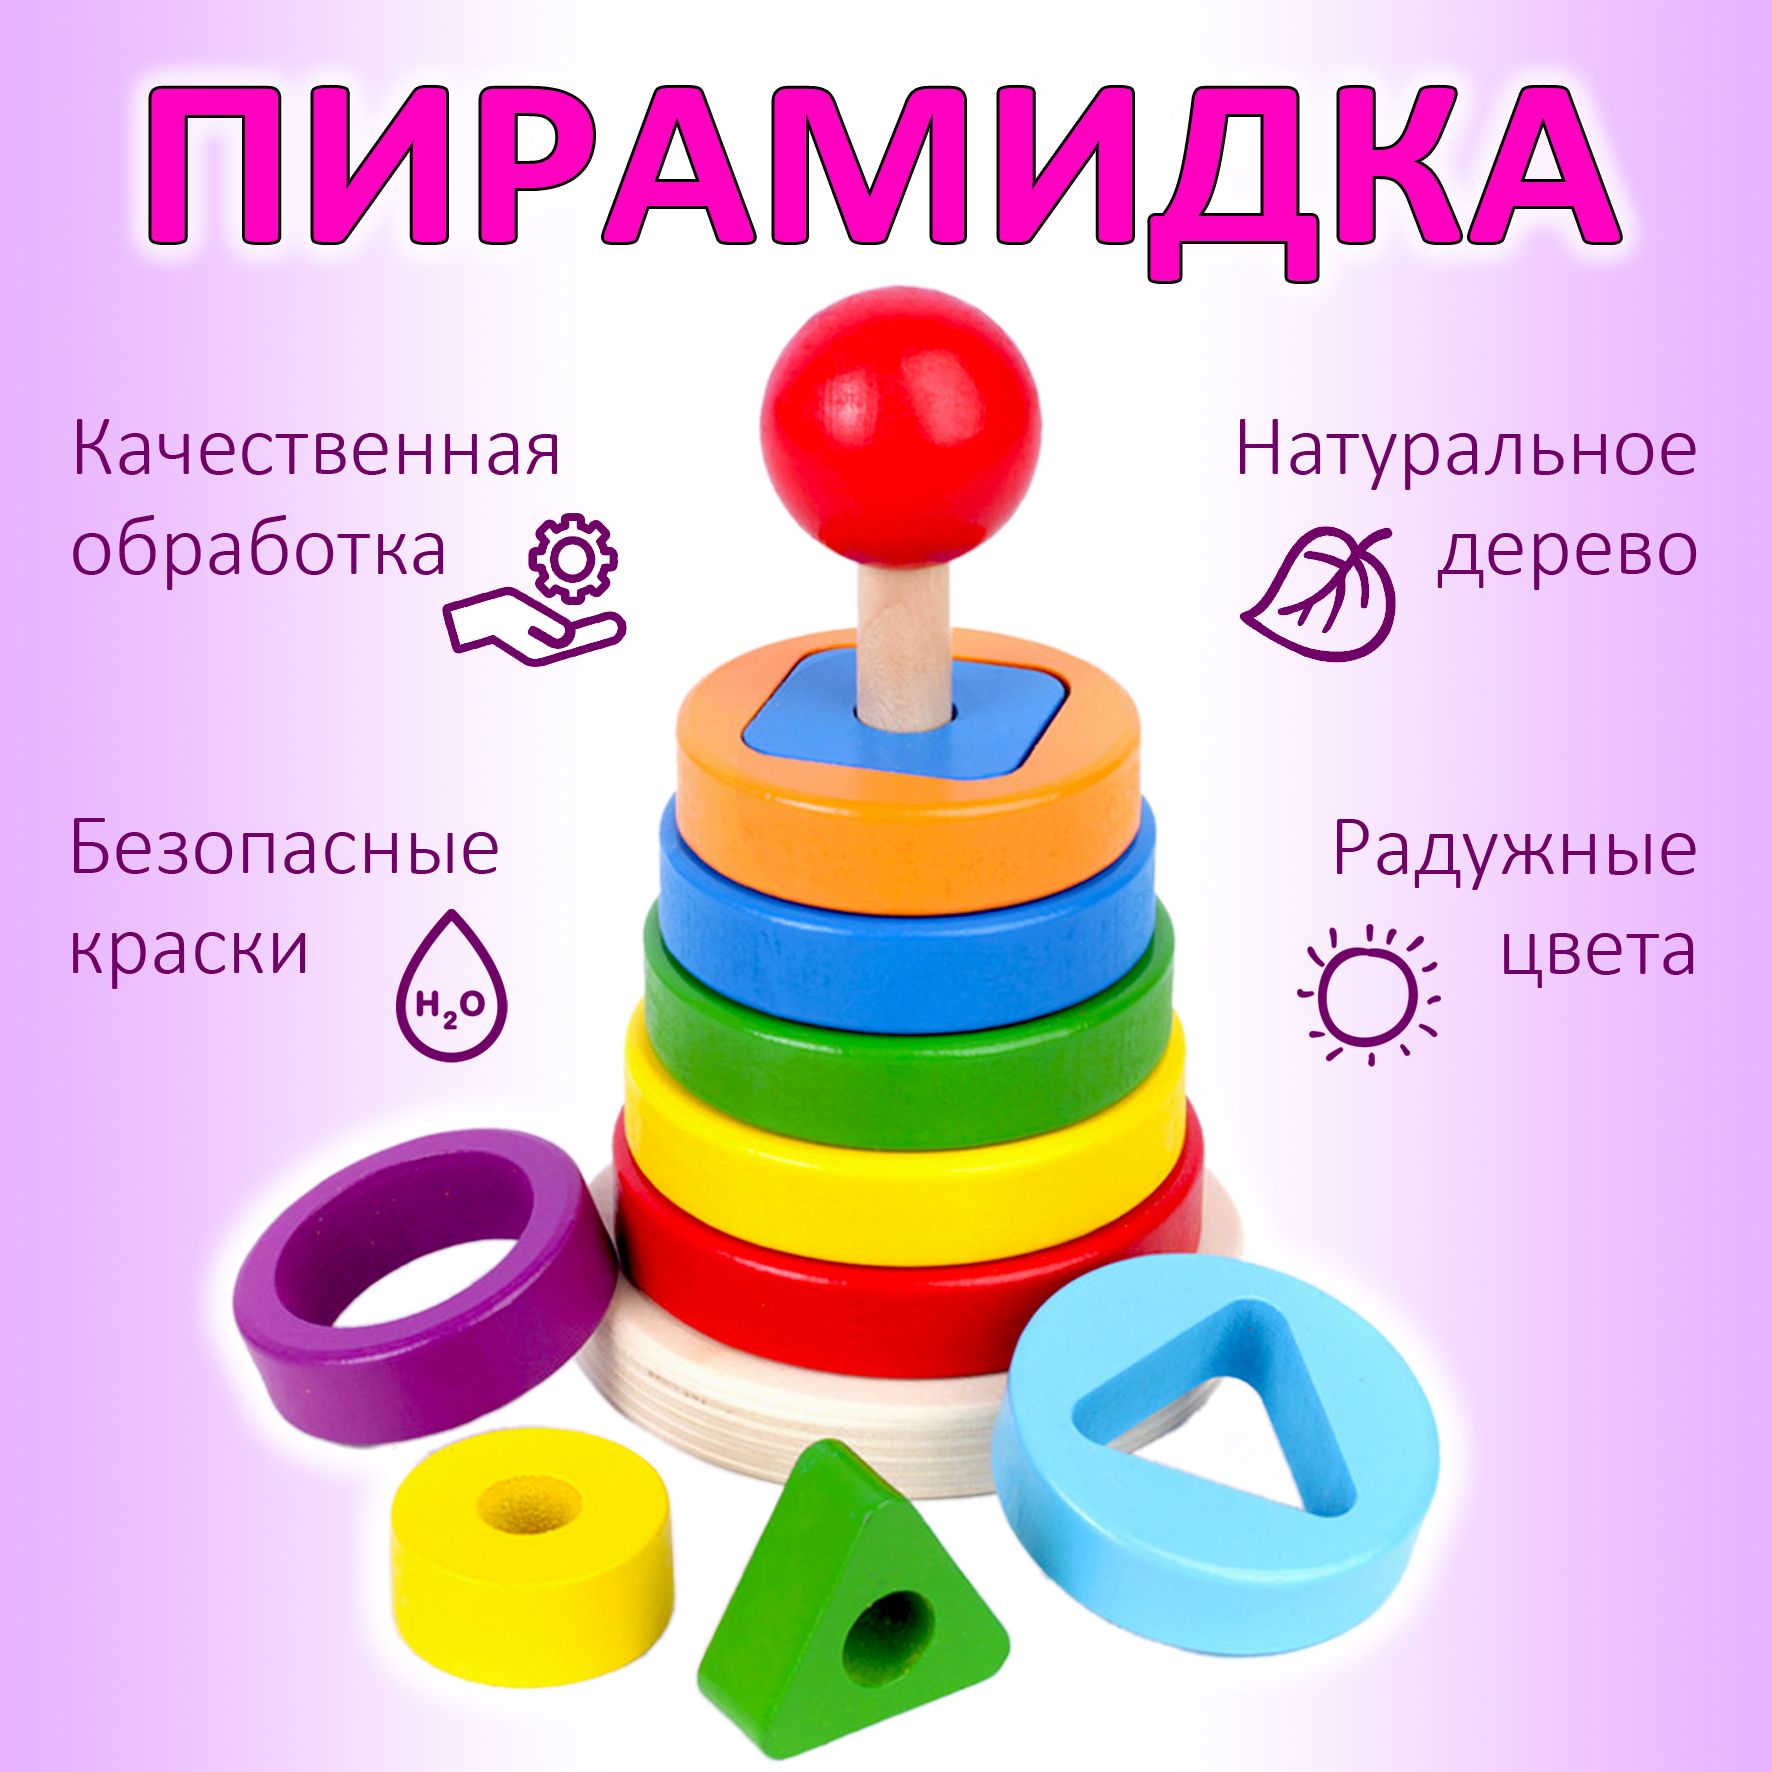 Пирамидка Igrushka48 Деревянная с геометрическими фигурами деревянная игрушка bondibon игра с шестеренками и фигурами бабочка